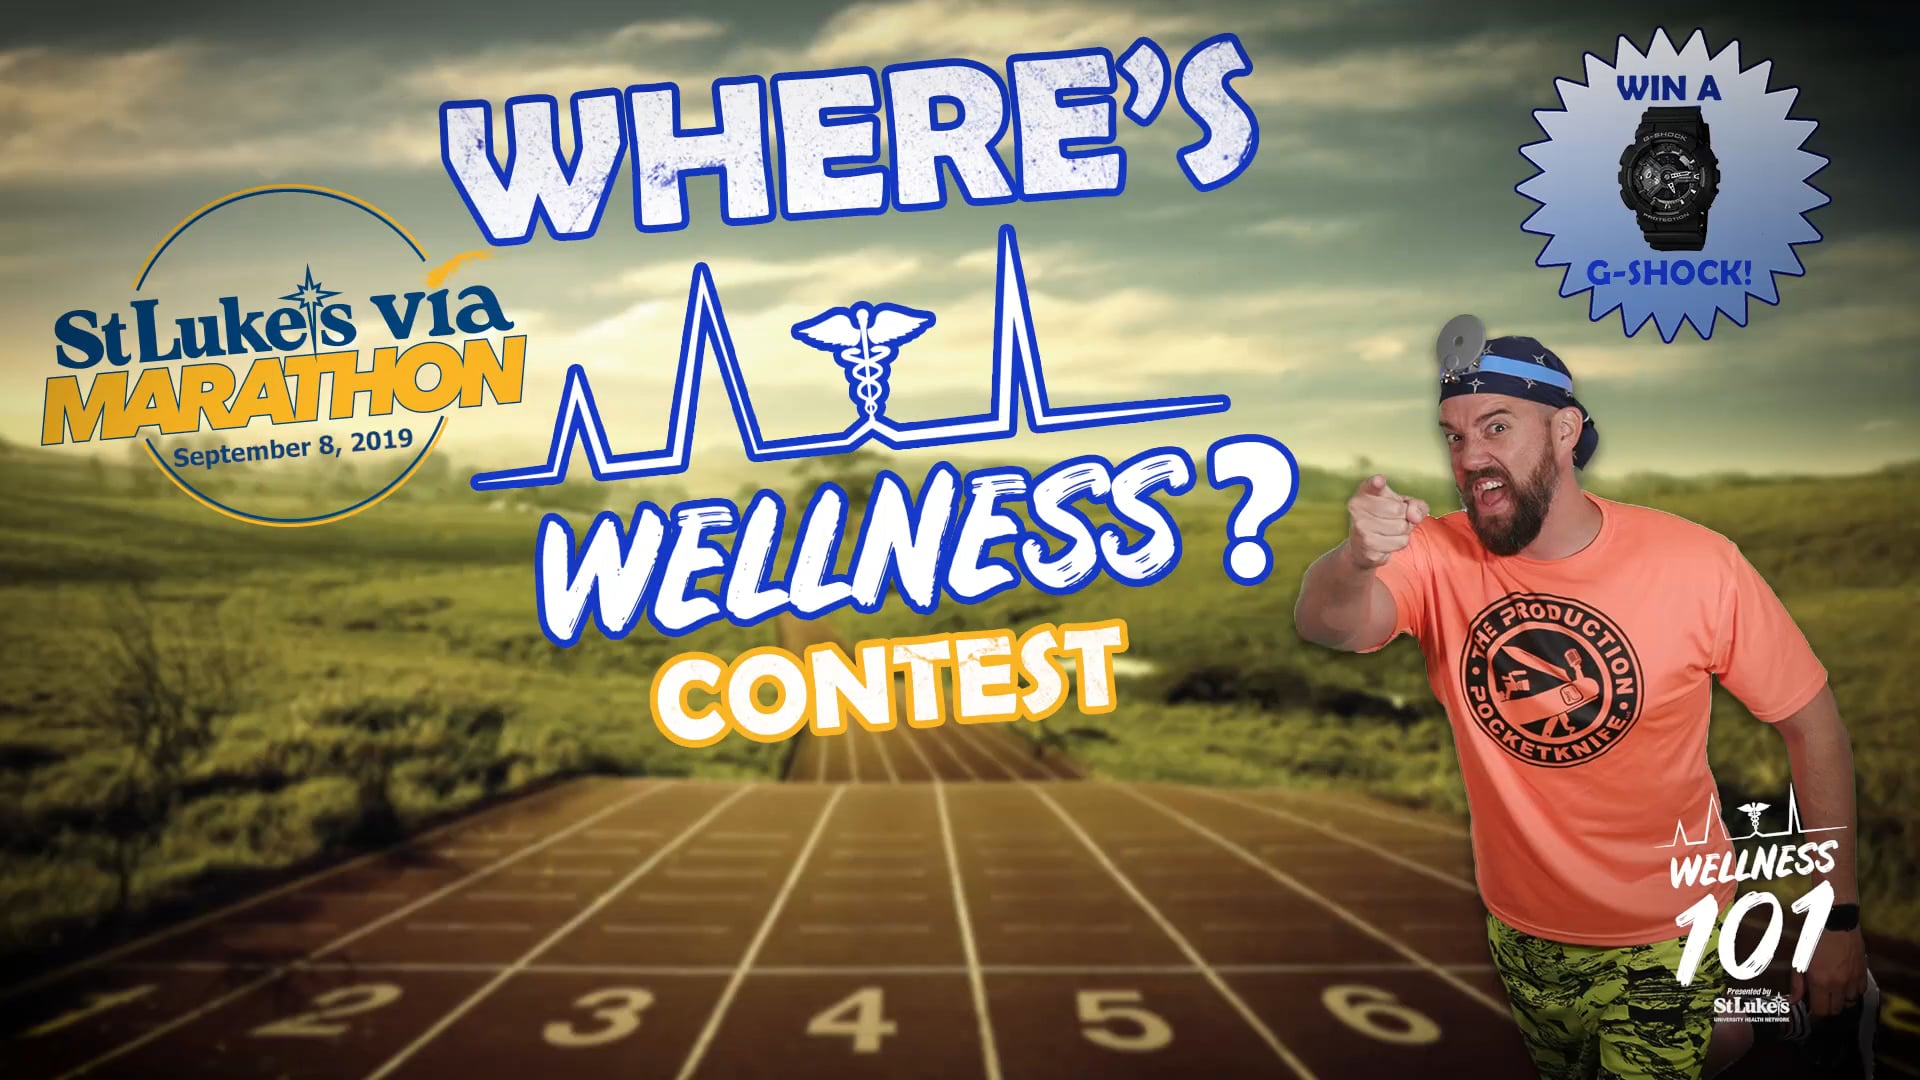 St. Luke's Via Marathon Where's Wellness Contest